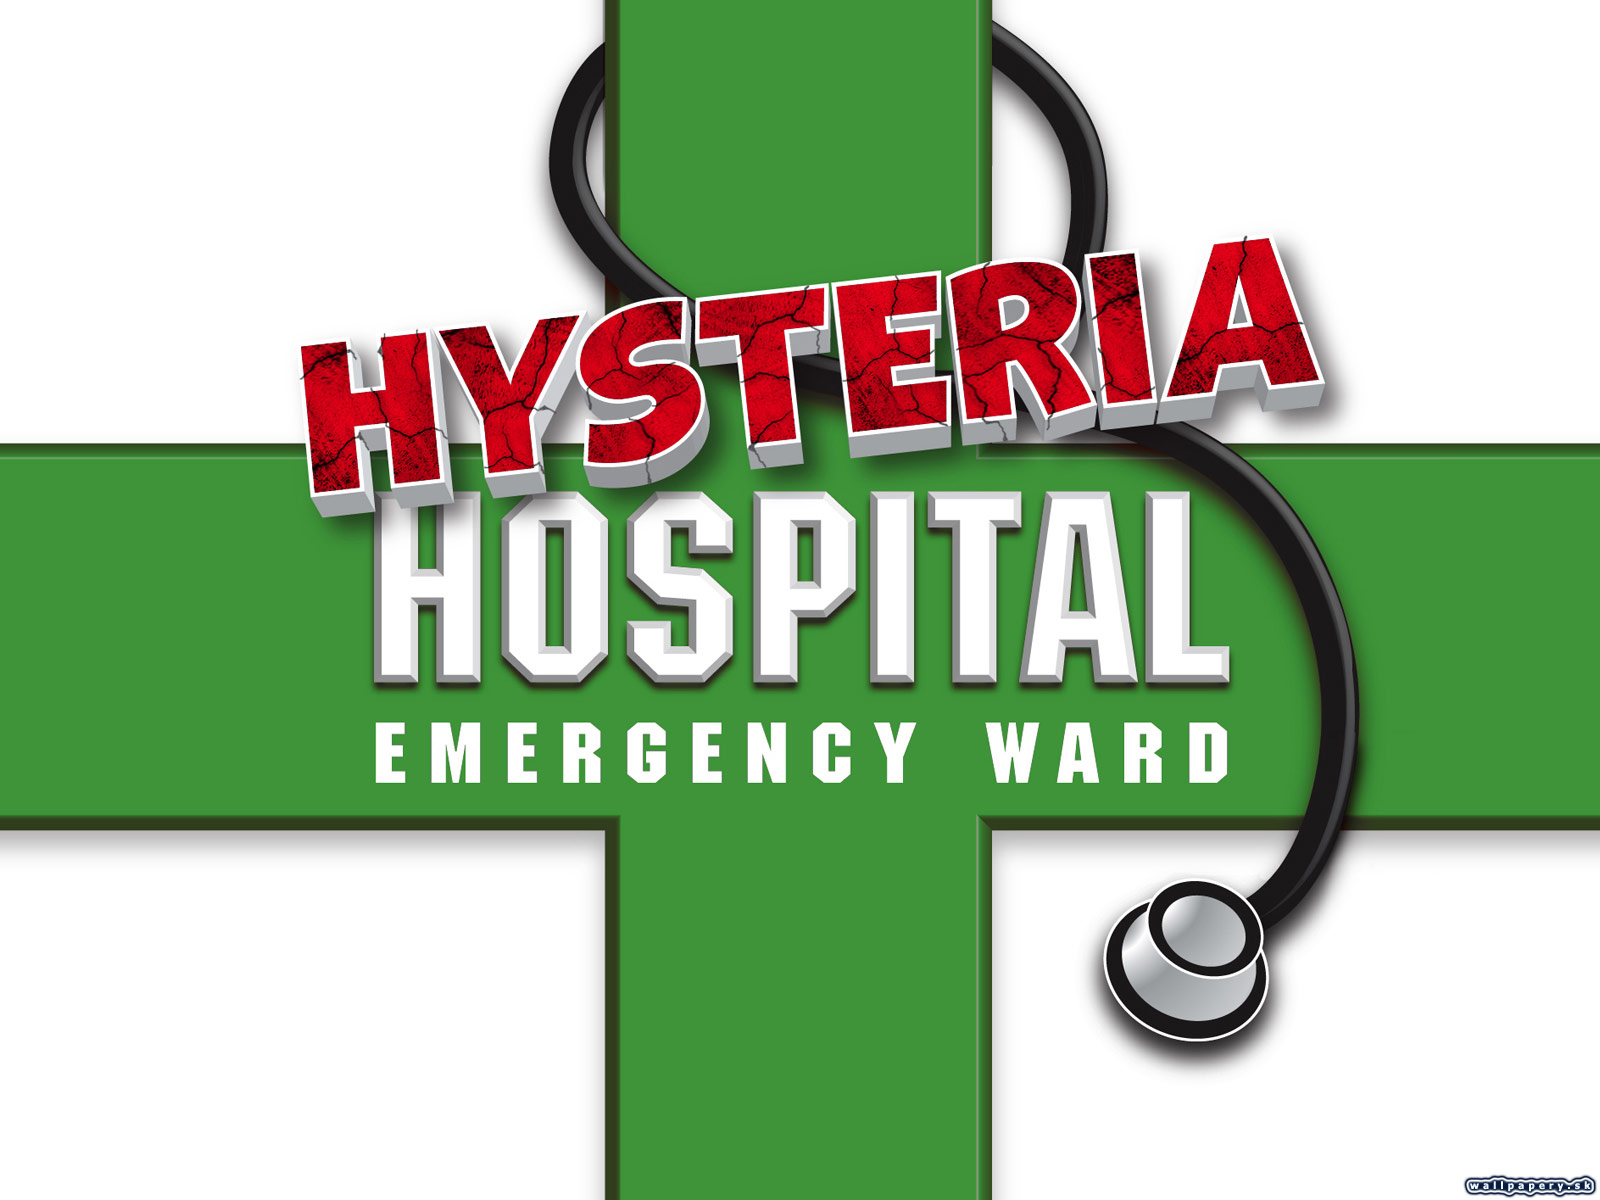 Hysteria Hospital: Emergency Ward - wallpaper 1